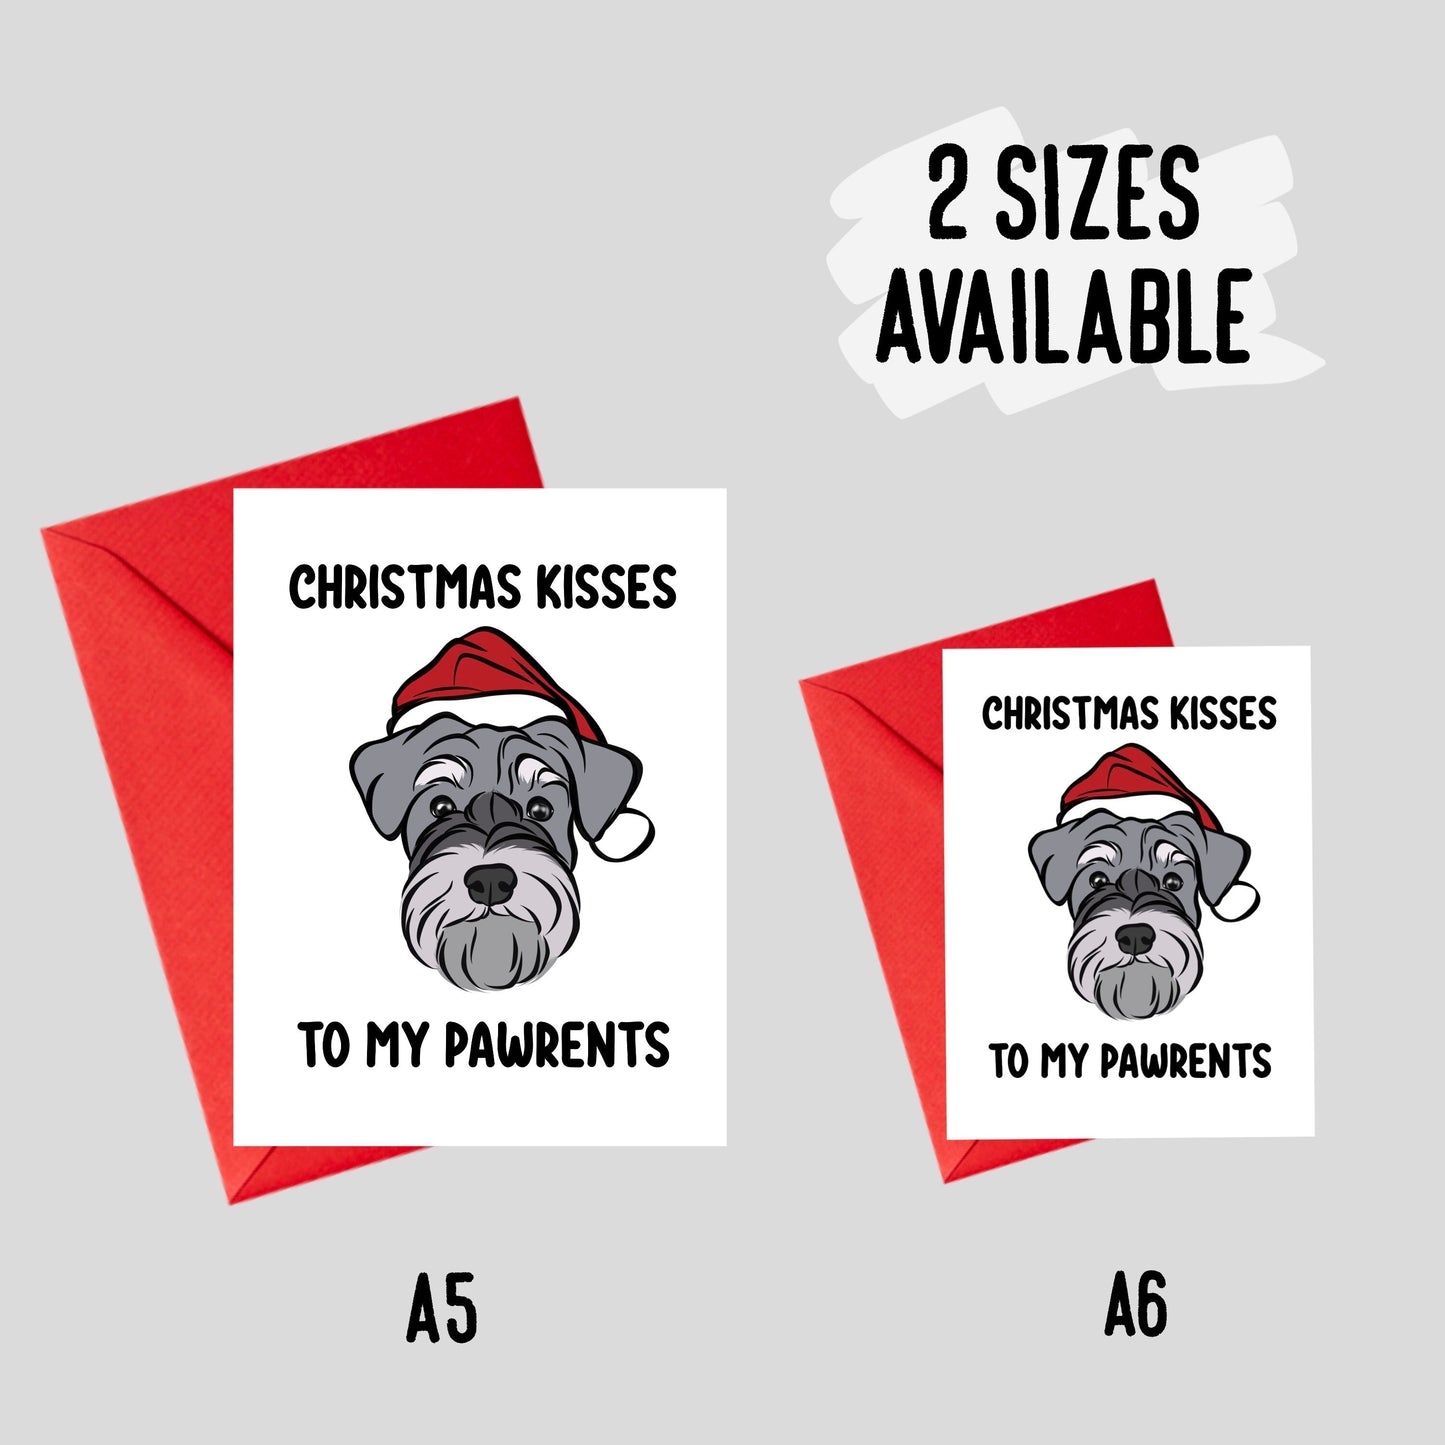 Miniature Schnauzer Christmas Card/ Custom Dog Illustration Greeting Card/ Pet Portrait Merry Christmas Card/ Cute Schnauzer Owner Card Gift